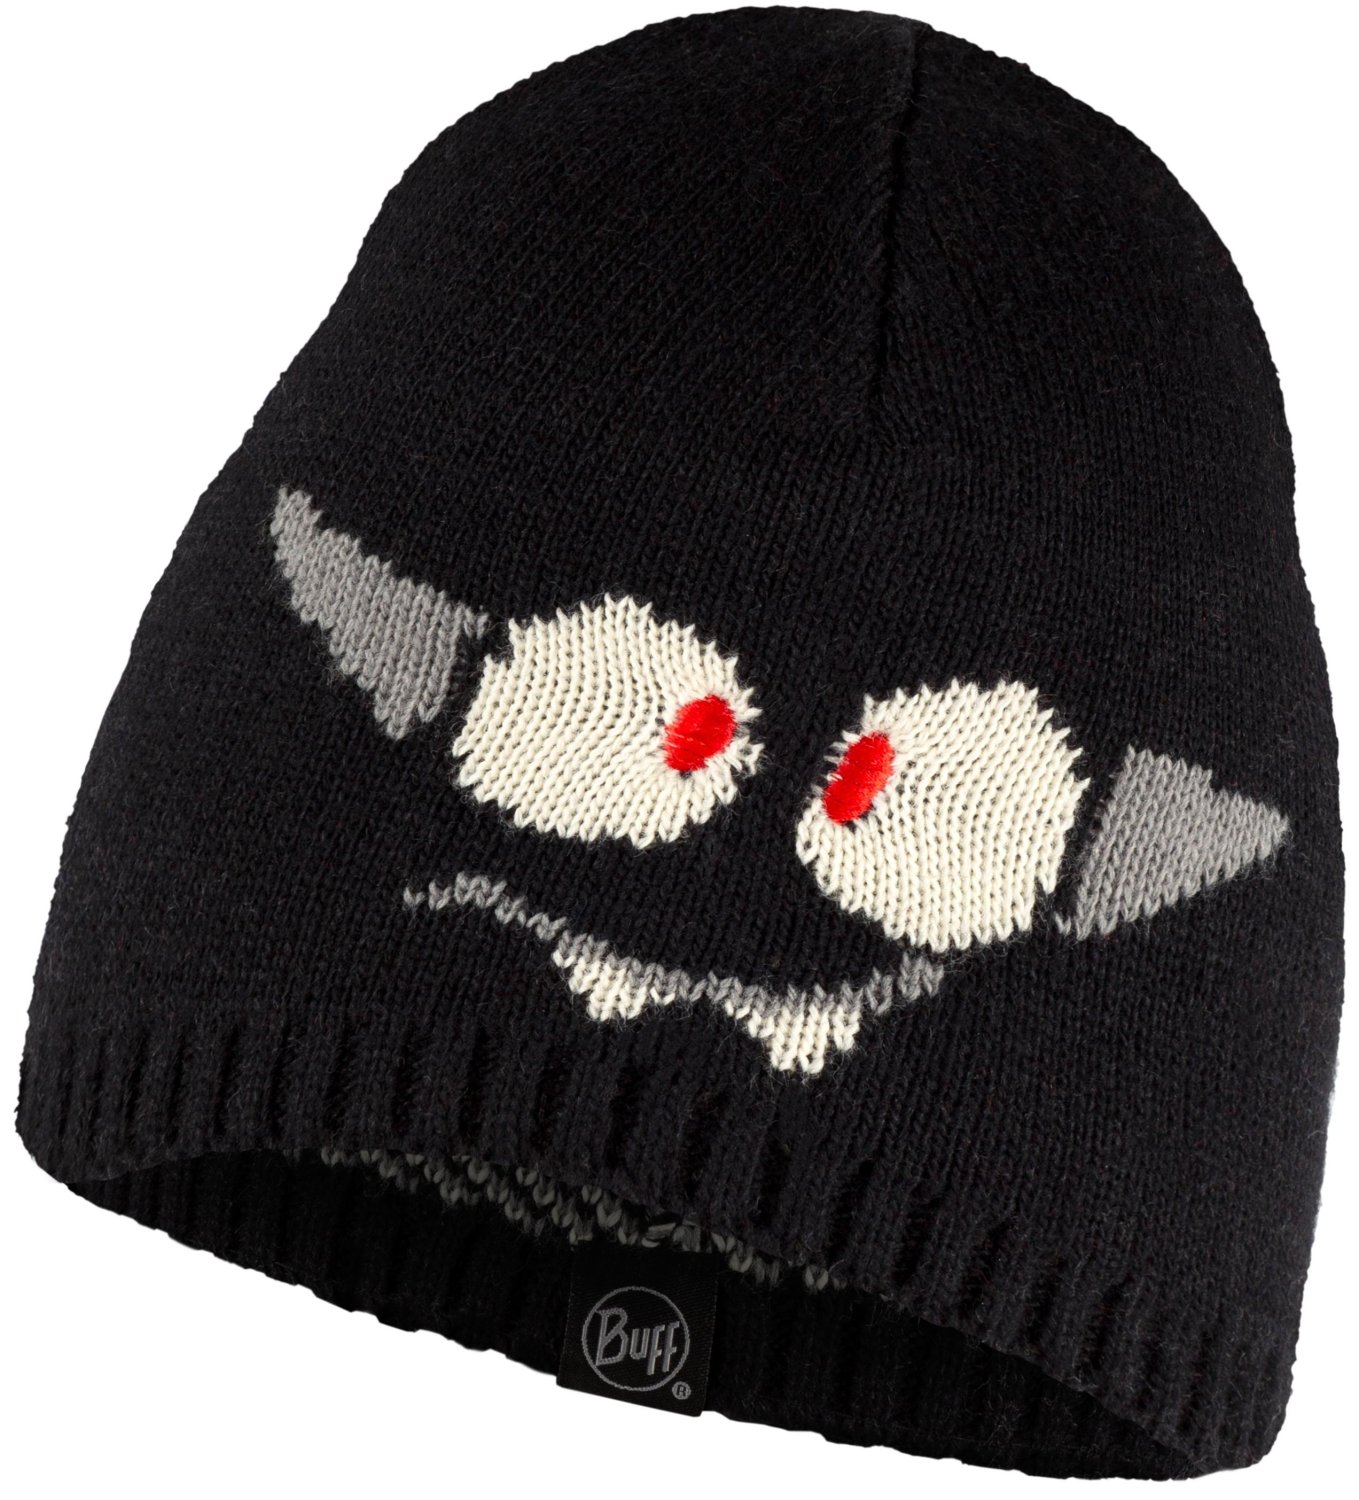 Шапка Buff Knitted Hat Bonky Baffy Black US:one size, 129626.999.10.00 шапка buff knitted hat bonky eyes denim us one size 129626 788 10 00